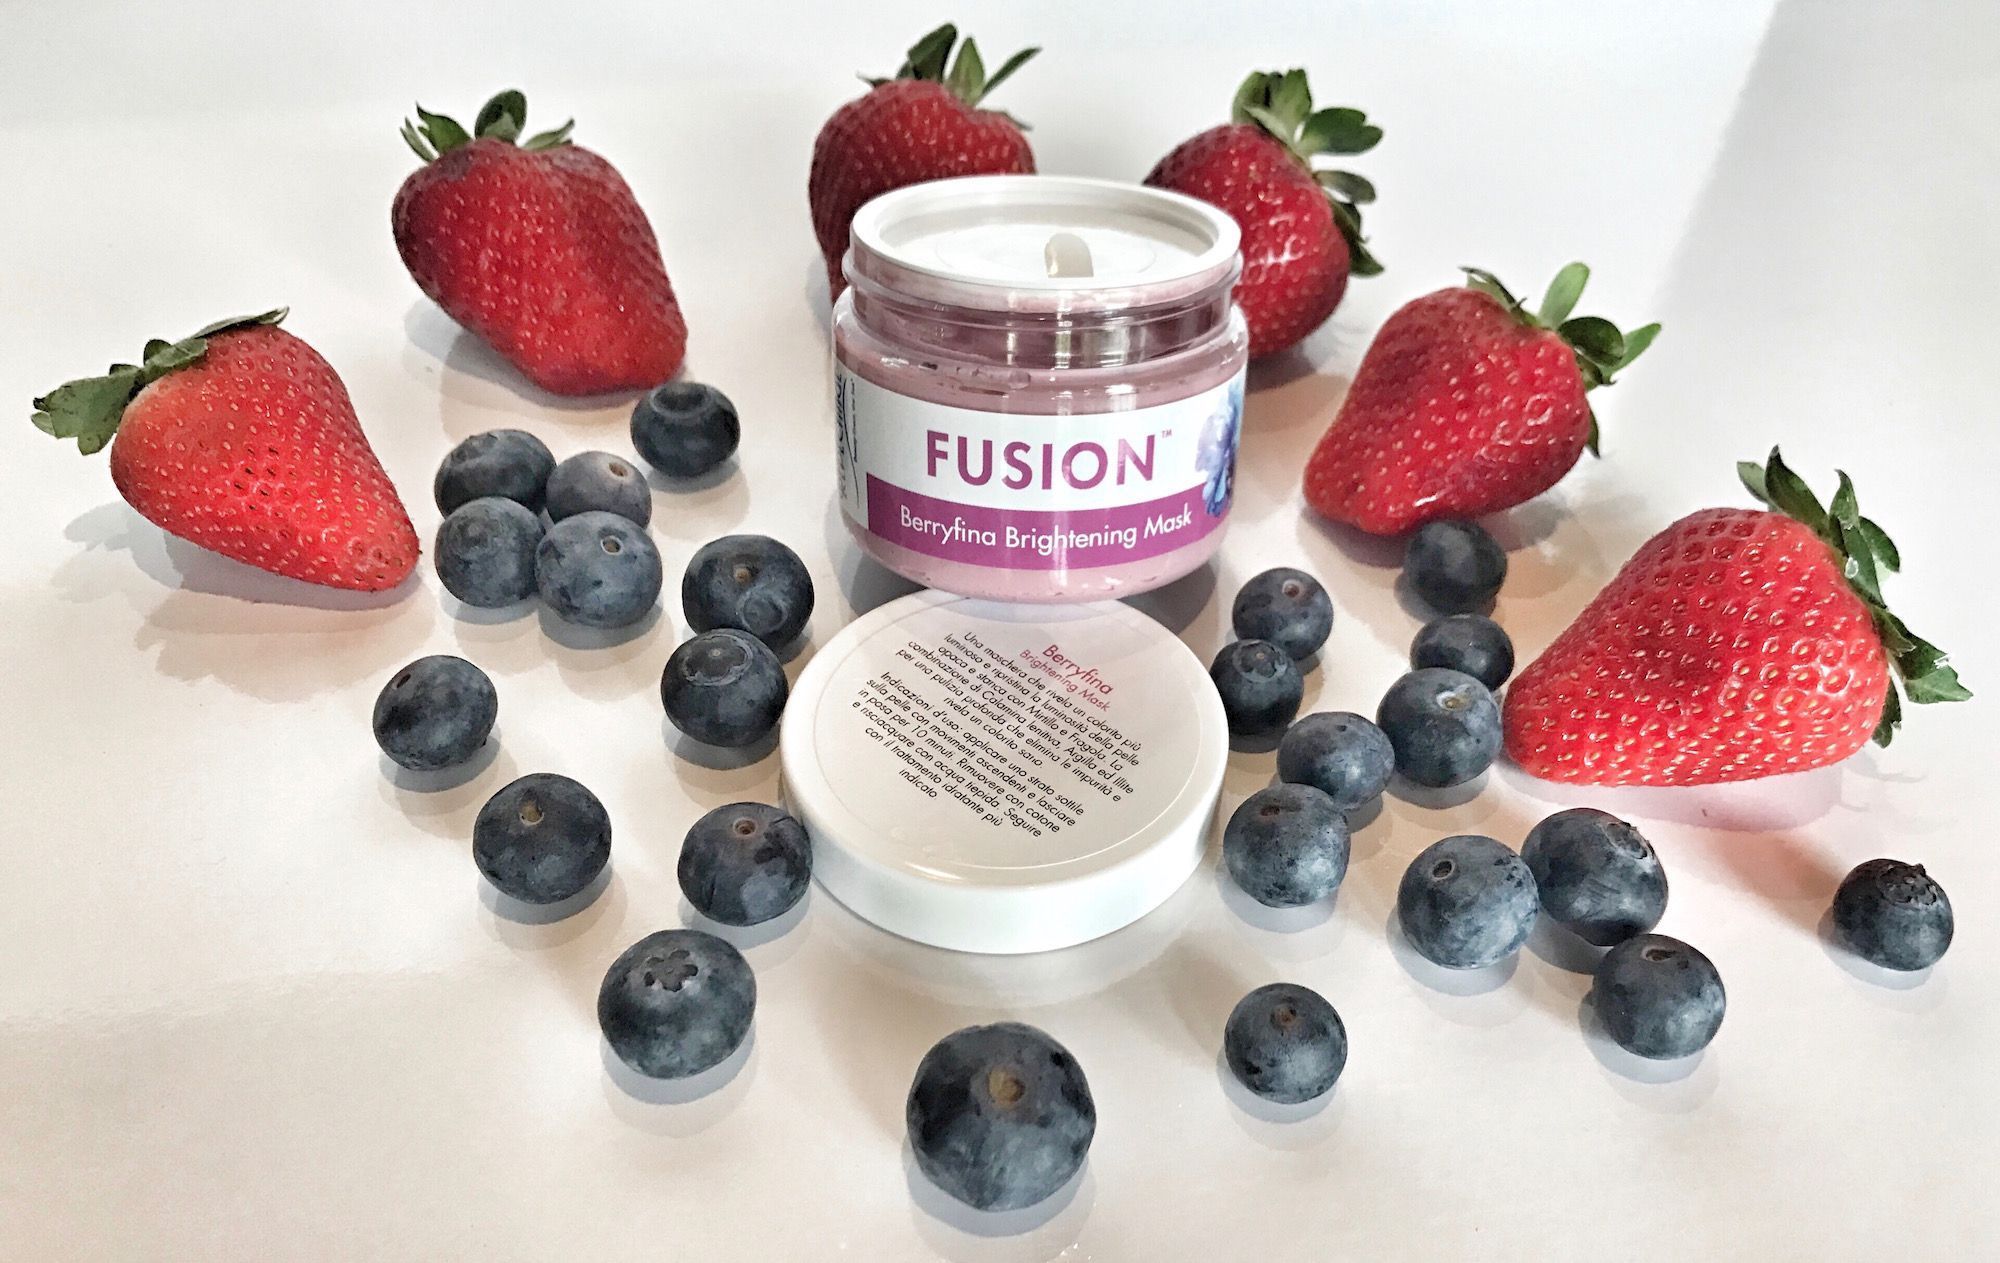 Fusion Berryfina Brightening Mask